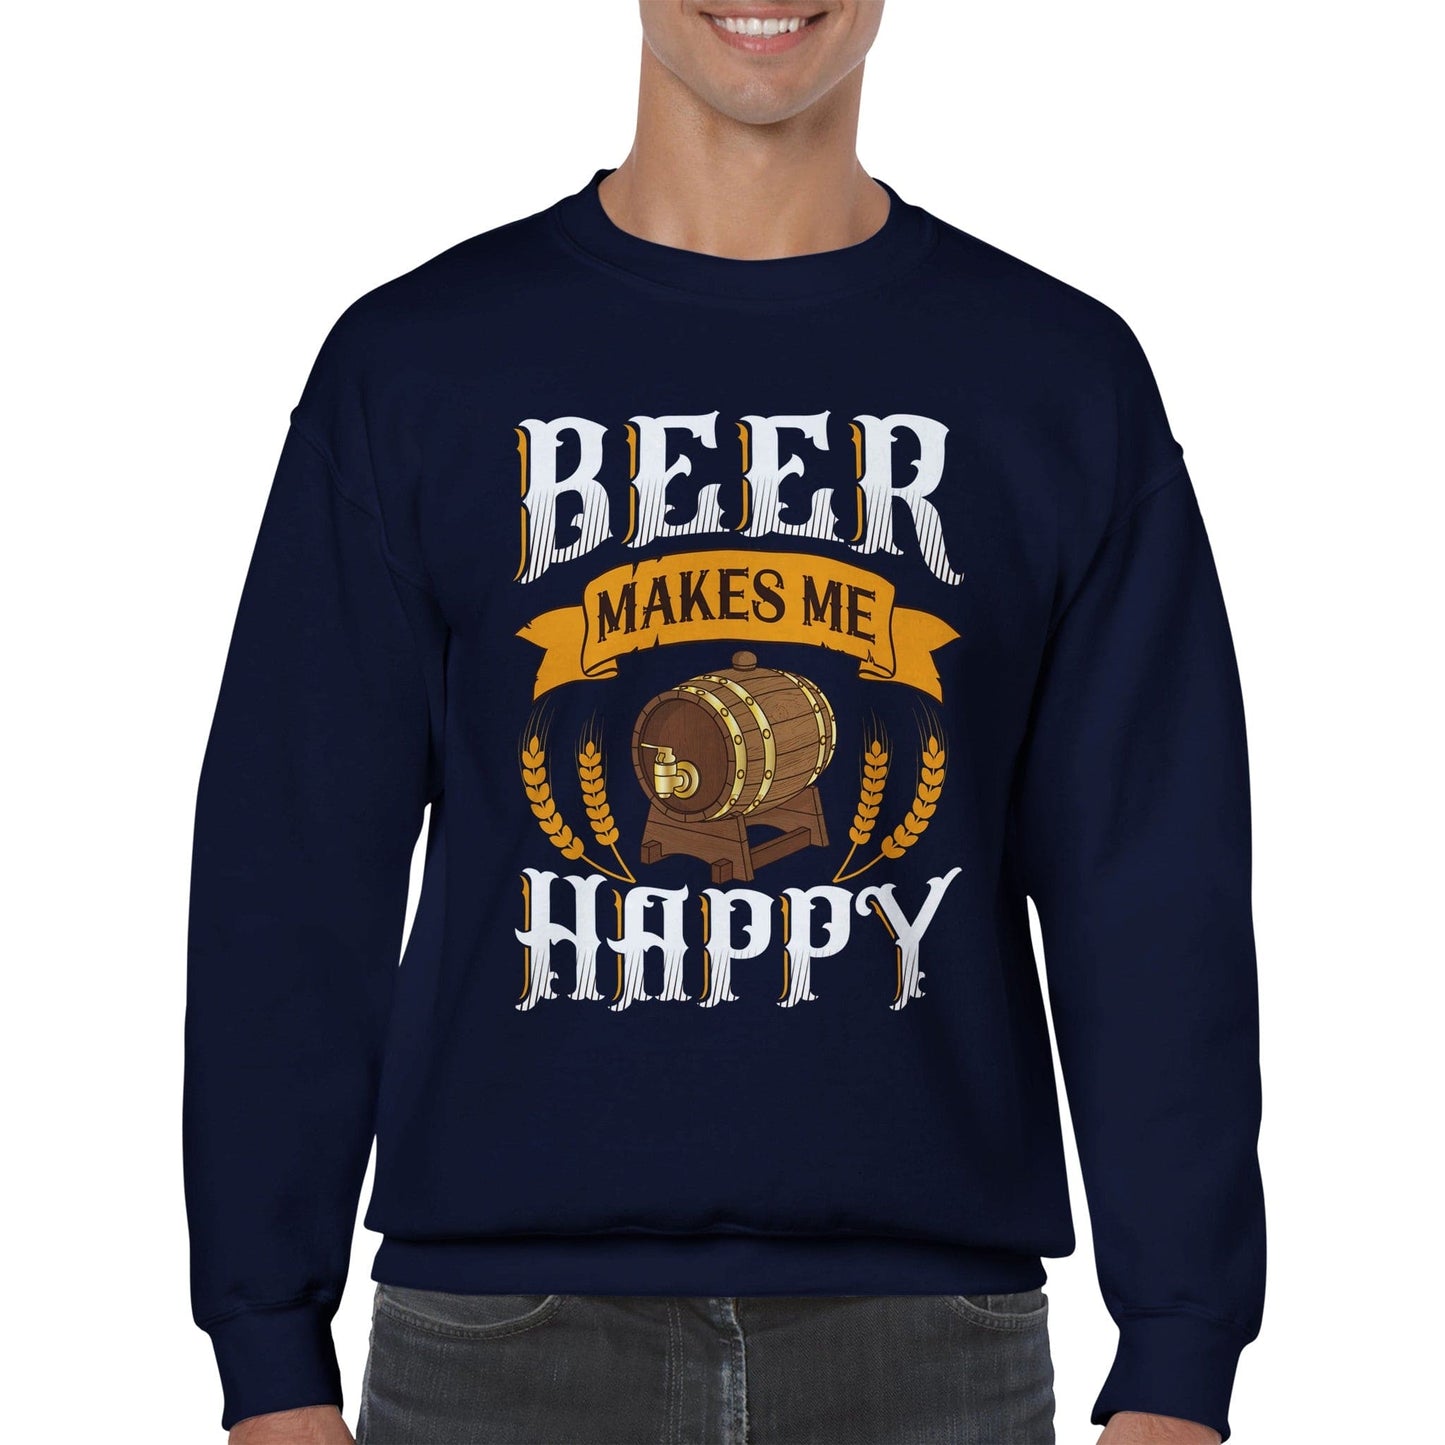 Pull "Beer makes me happy"